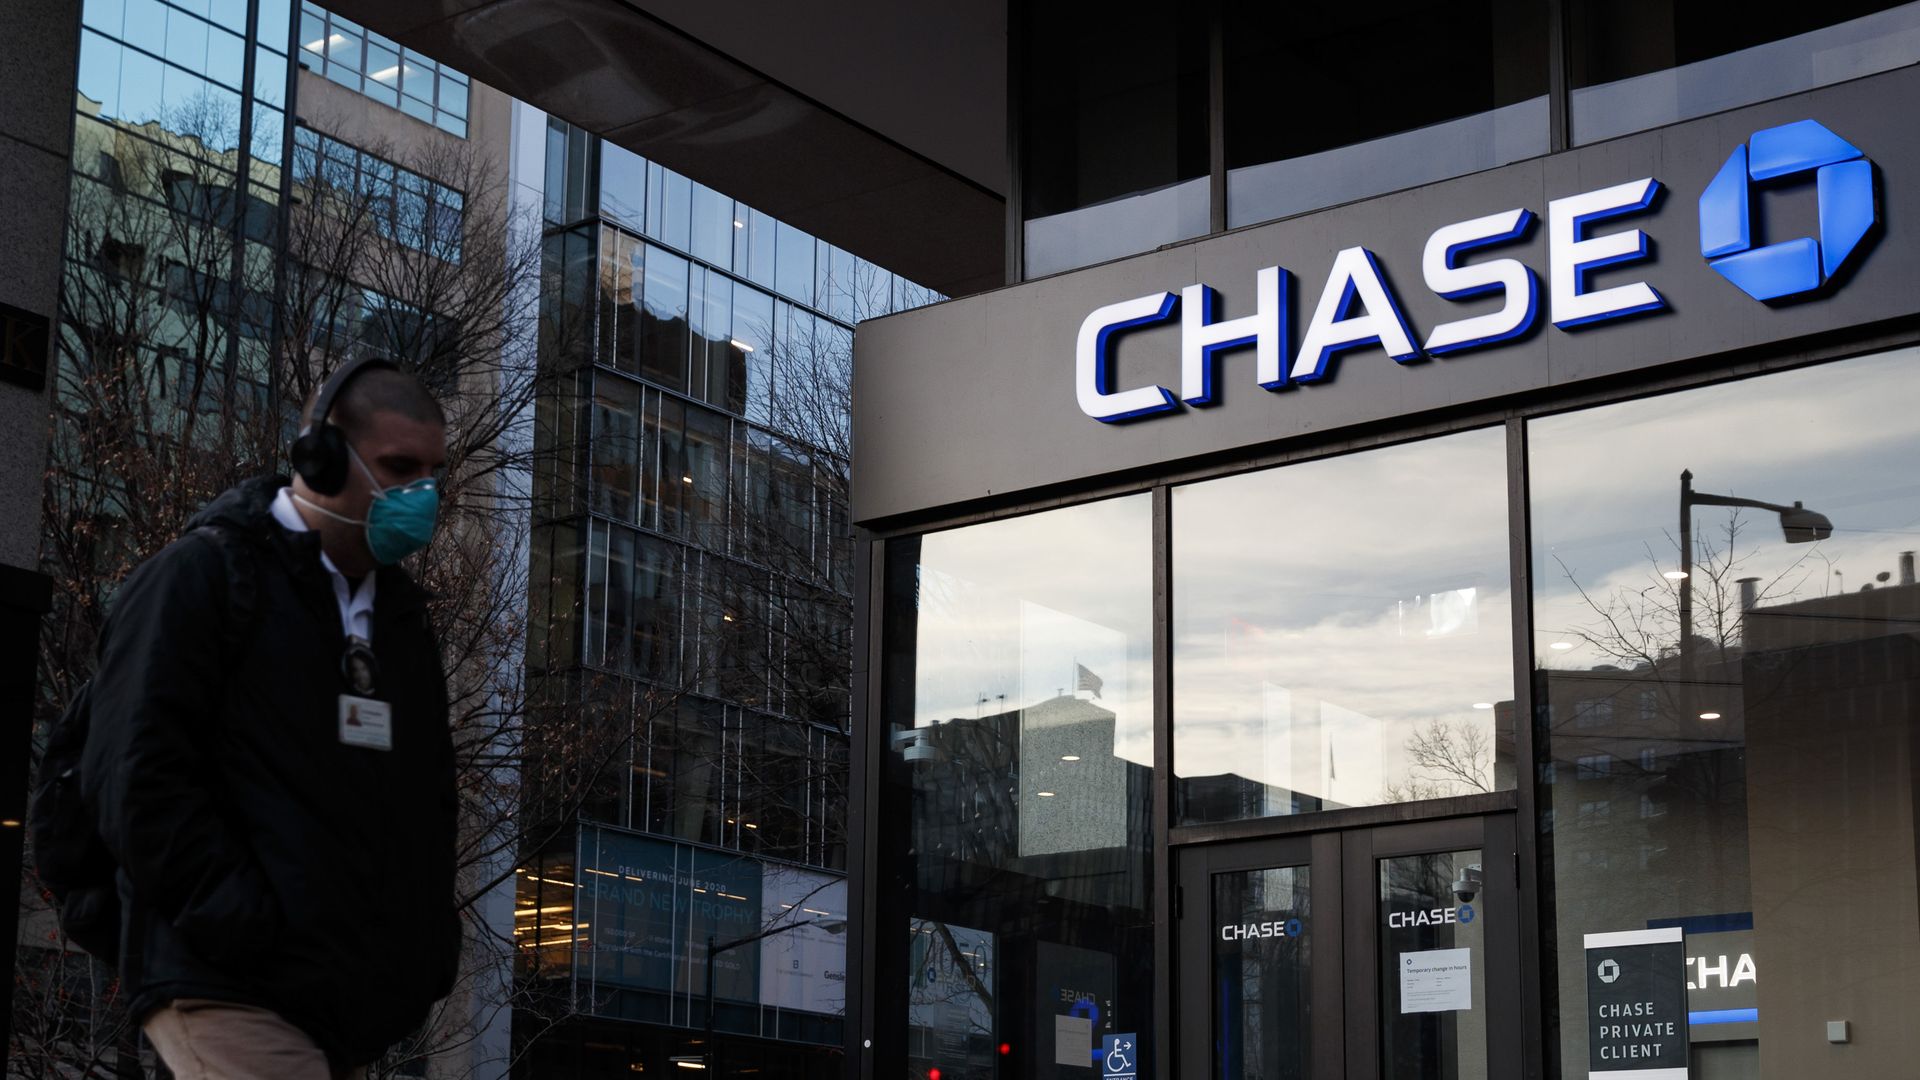 A pedestrian wearing a protective mask walks past a JPMorgan Chase bank branch 